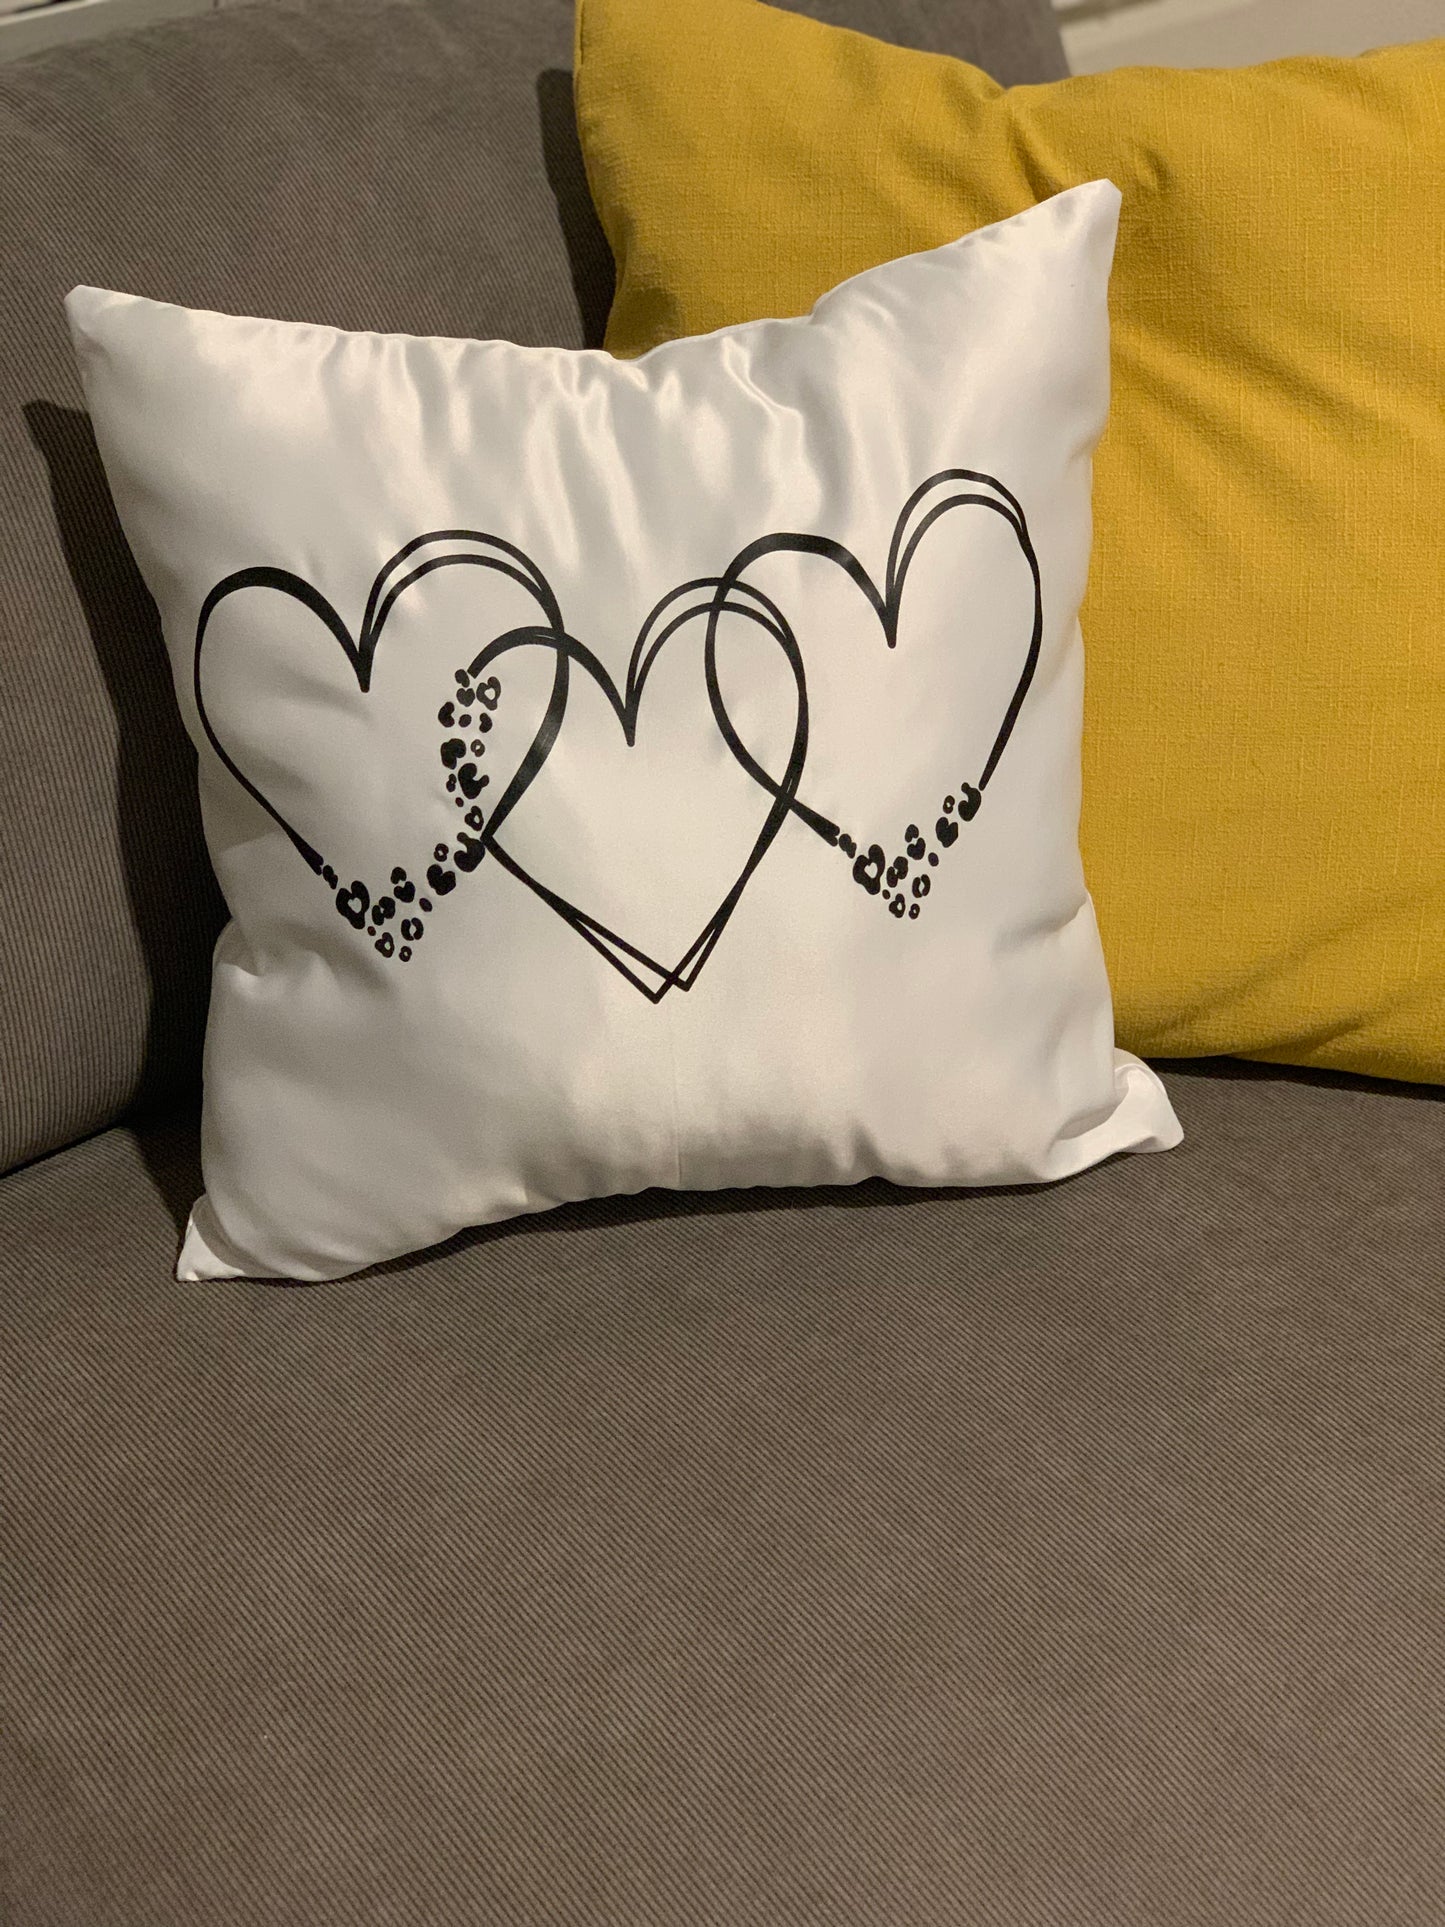 Three interlocking heart pillow